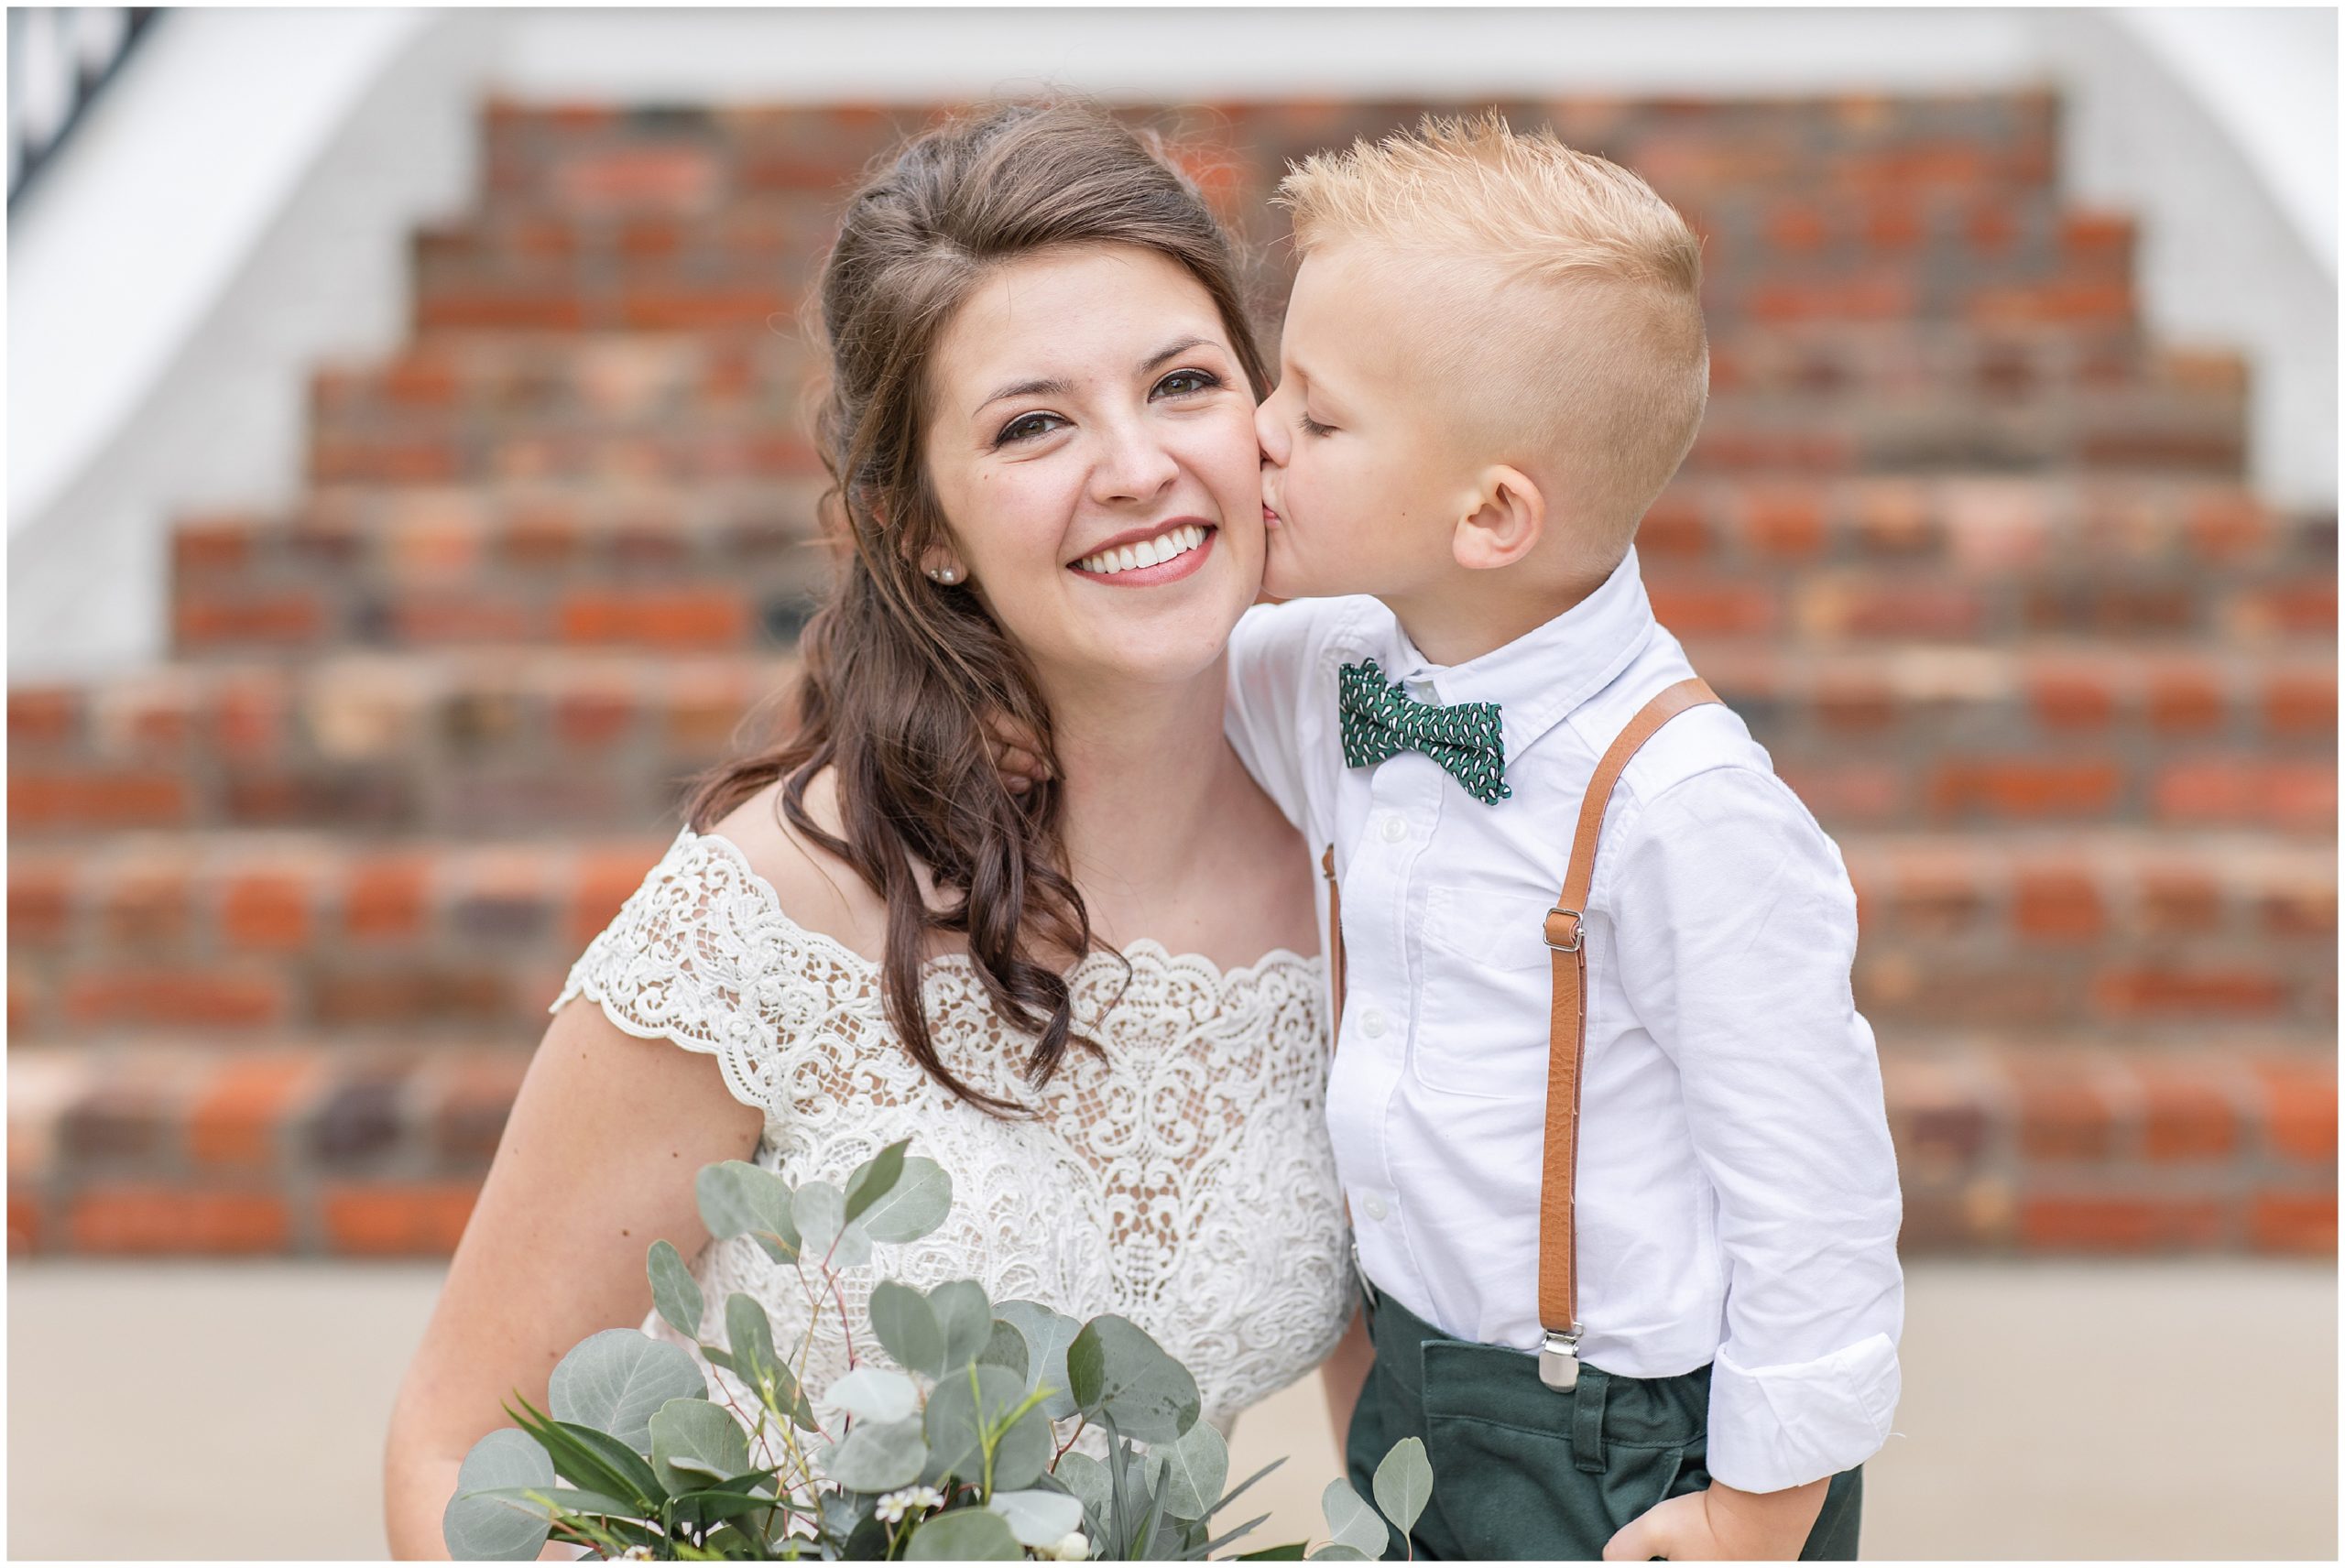 son kisses mom on cheek during wedding portraits